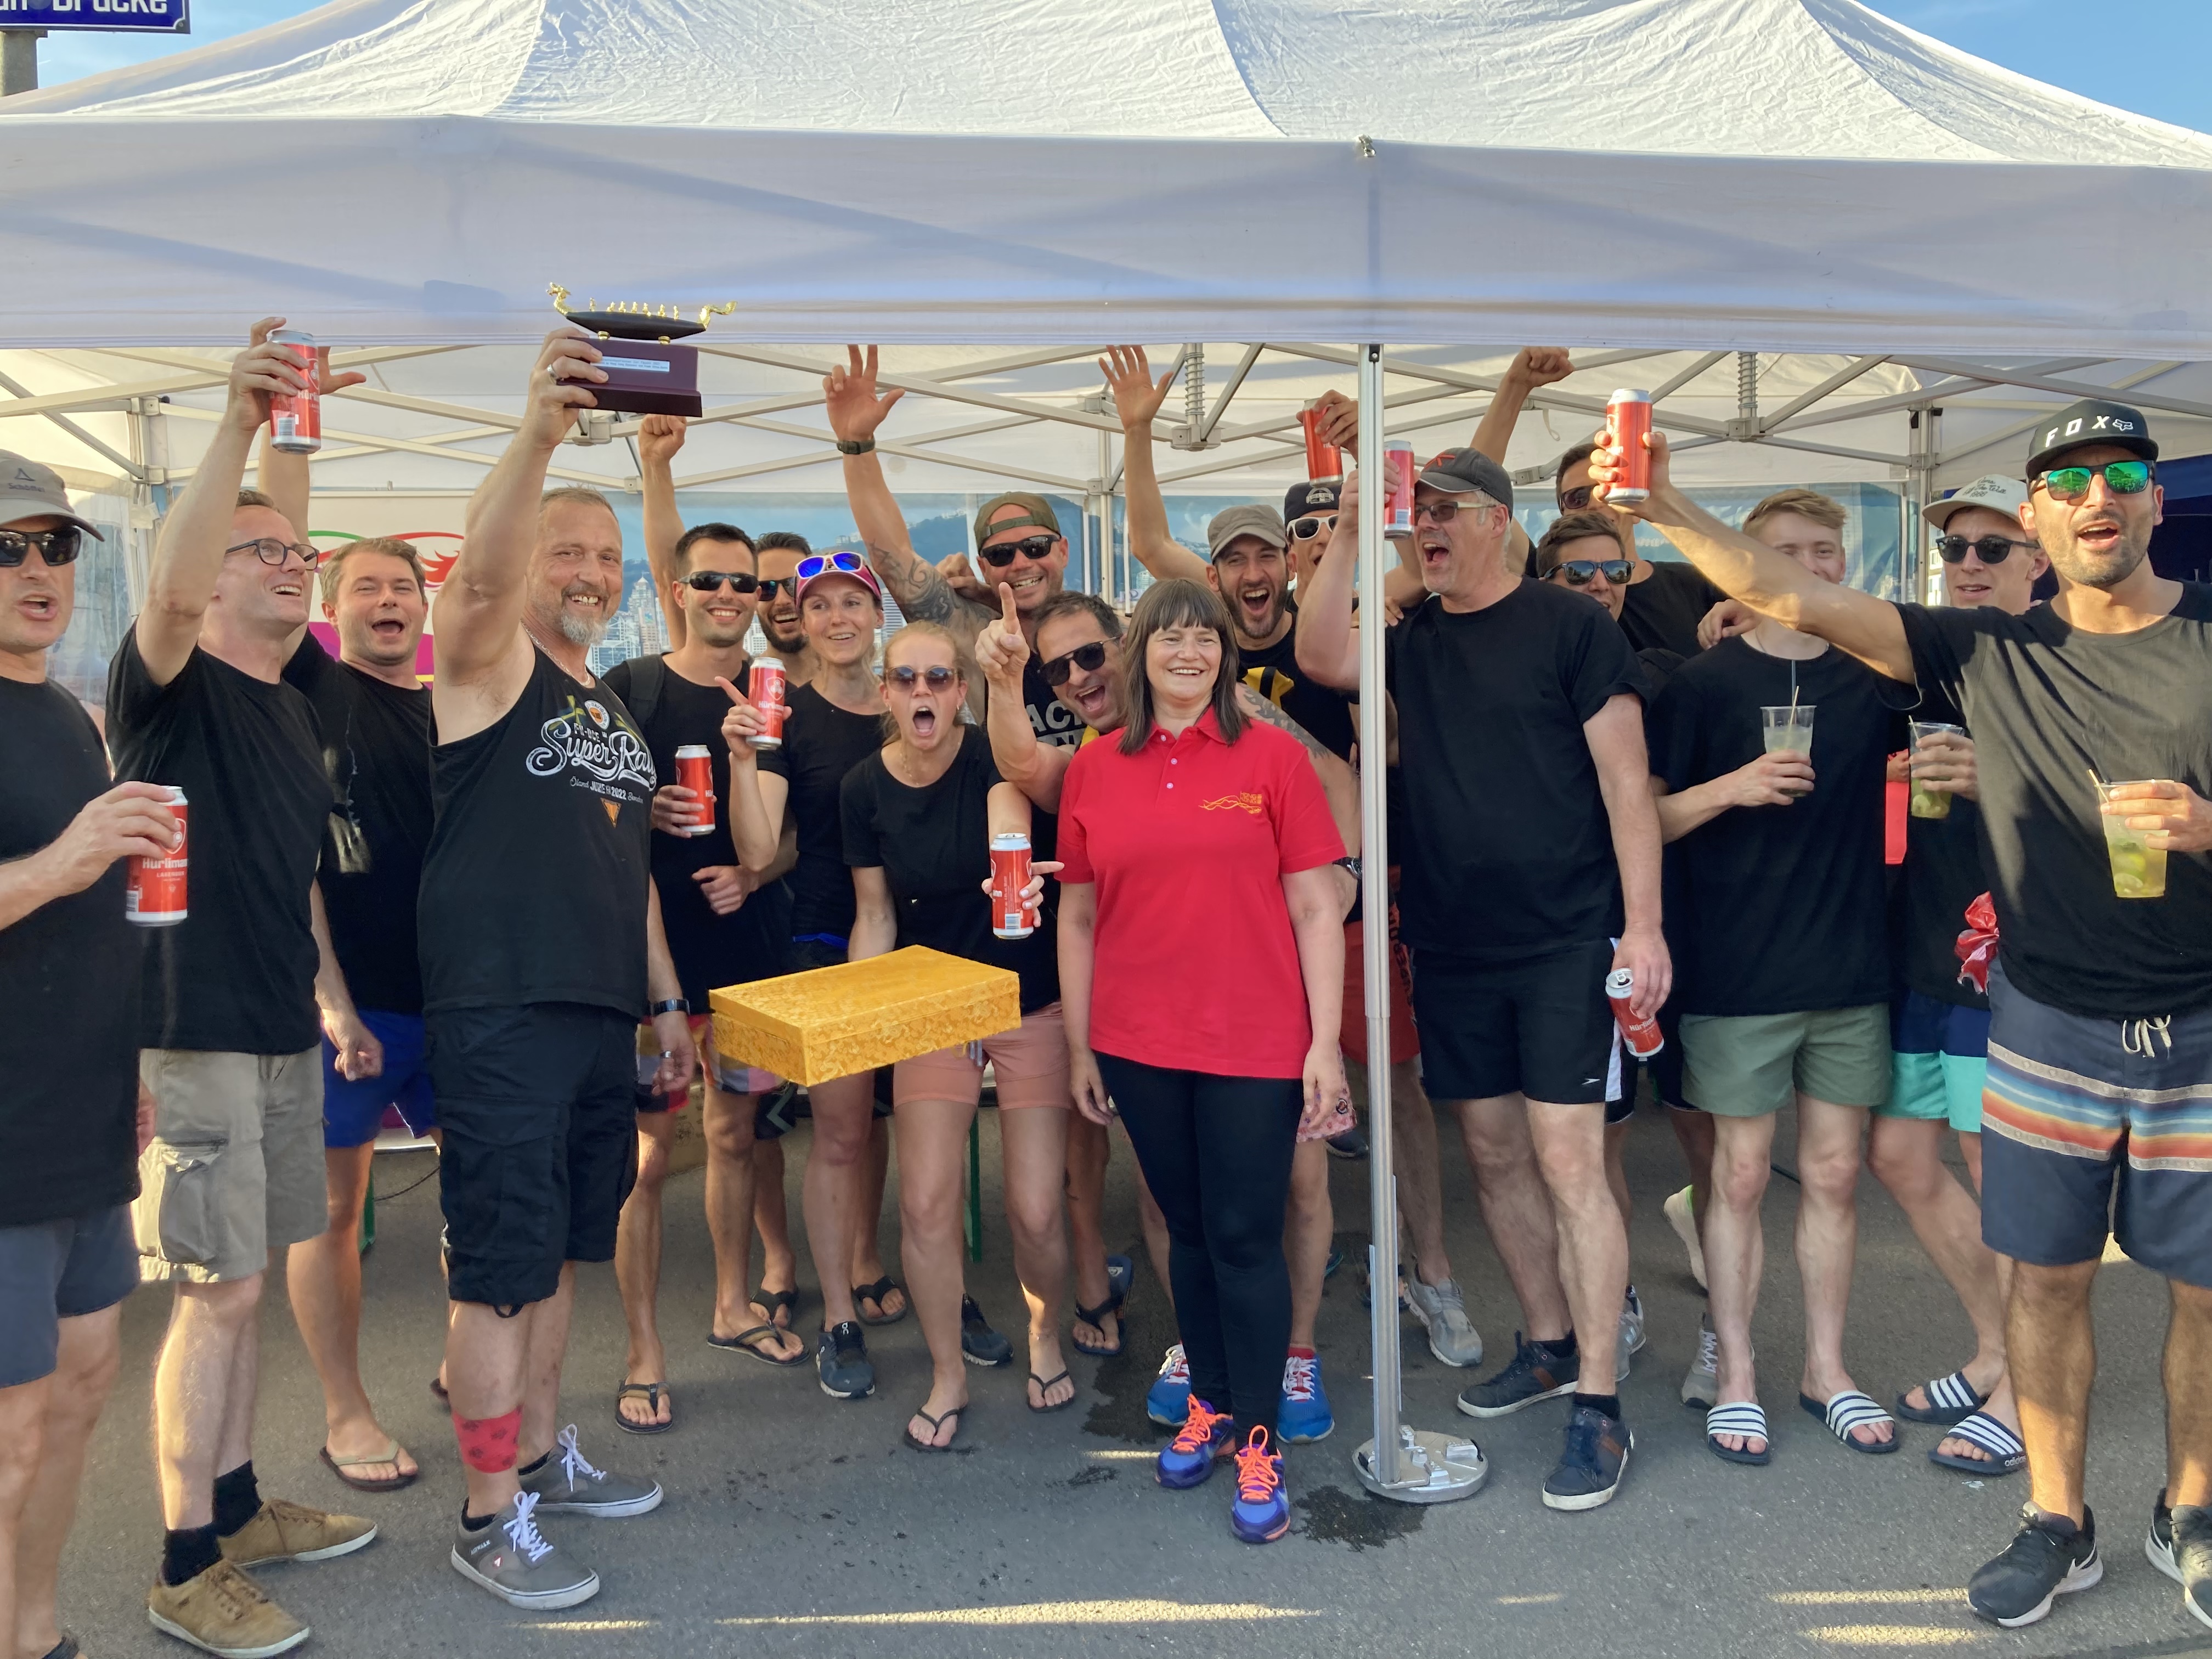 Dragon Boat Race in Switzerland’s biggest public festival